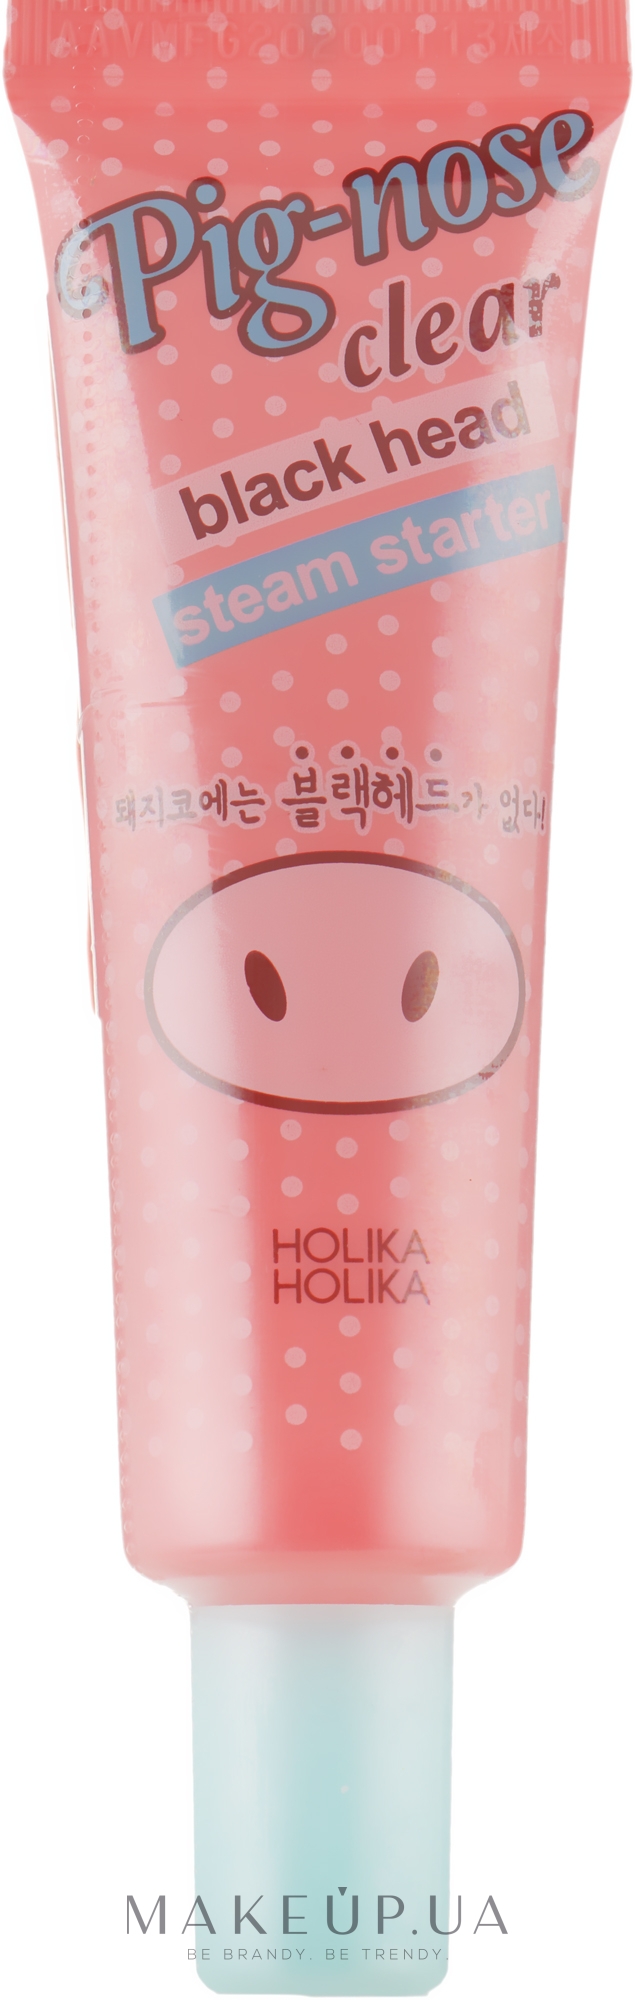 Термогель для очистки пор - Holika Holika Pig-Nose Clear Black Head Steam Starter  — фото 30ml